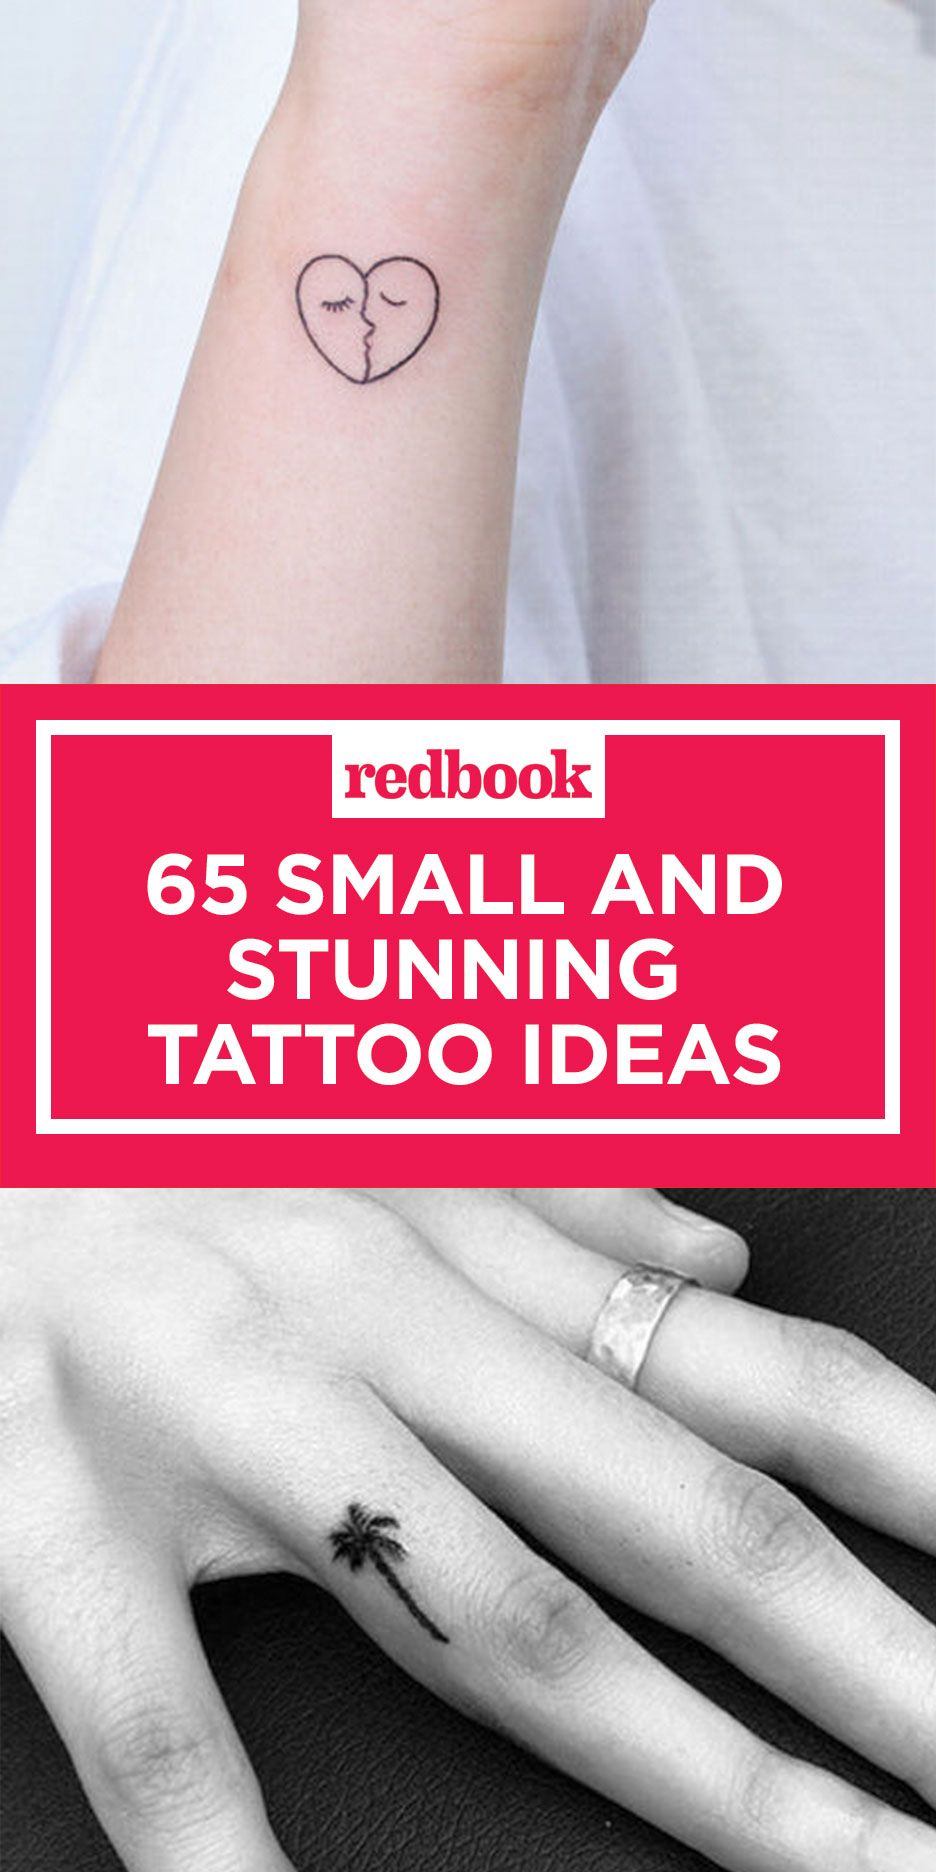 48 Unique Initial Tattoos For Wrist  Tattoo Designs  TattoosBagcom